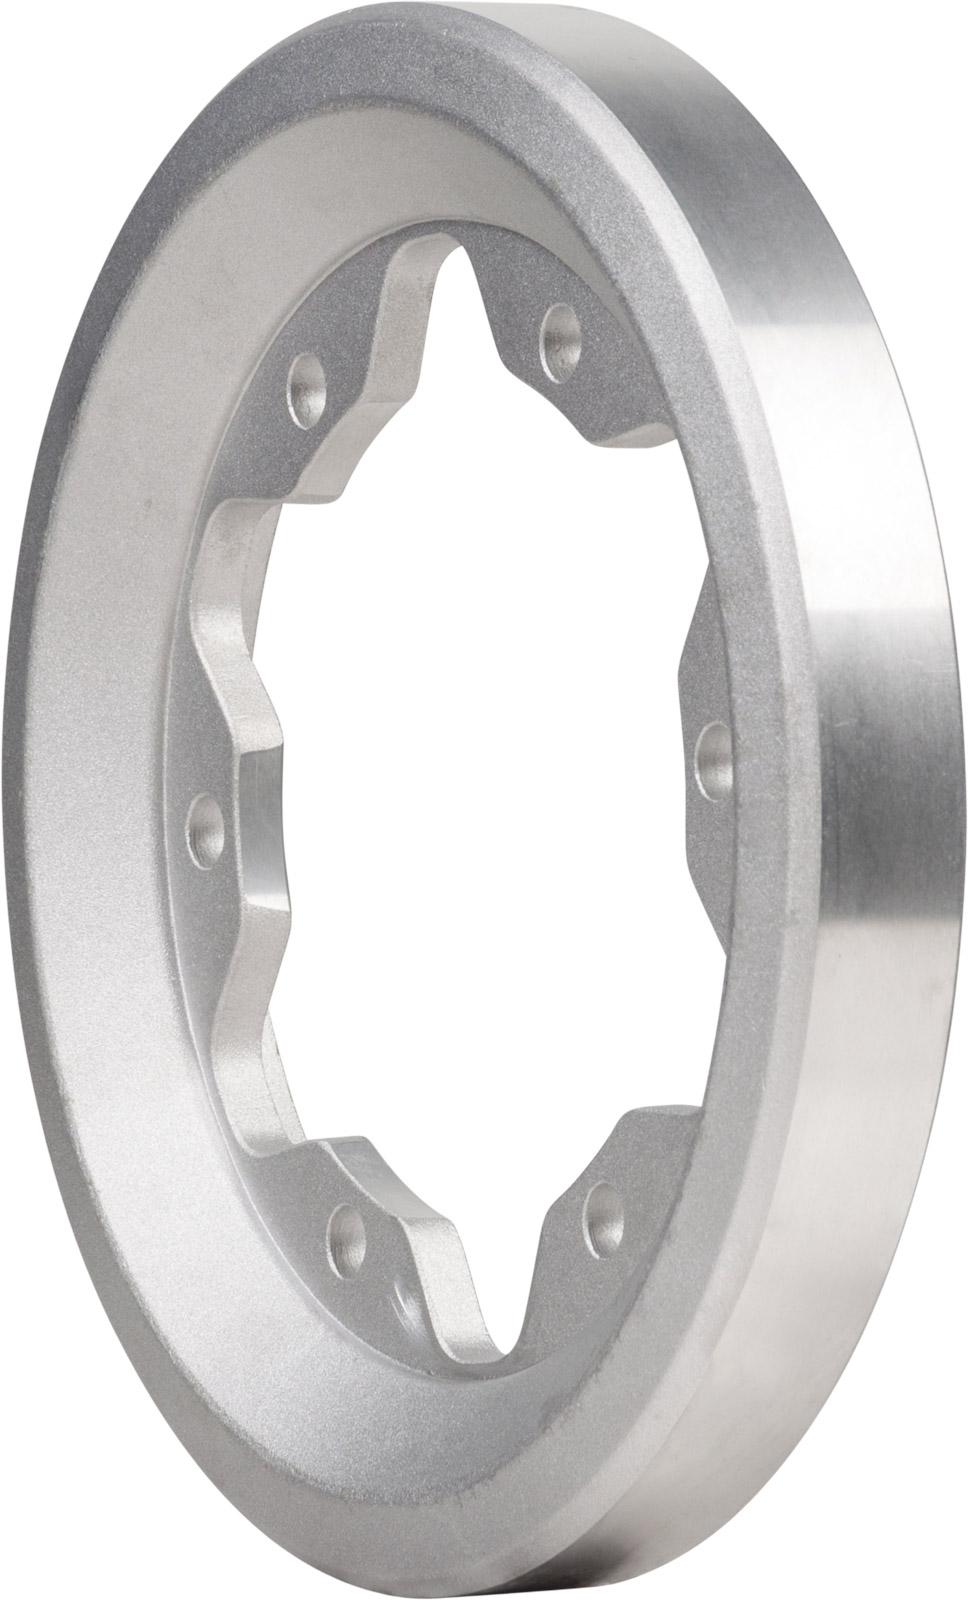 bogie wheel for cat 277c /287c / 297c 10"  - bolt pattern are tabs around inside edge of wheel